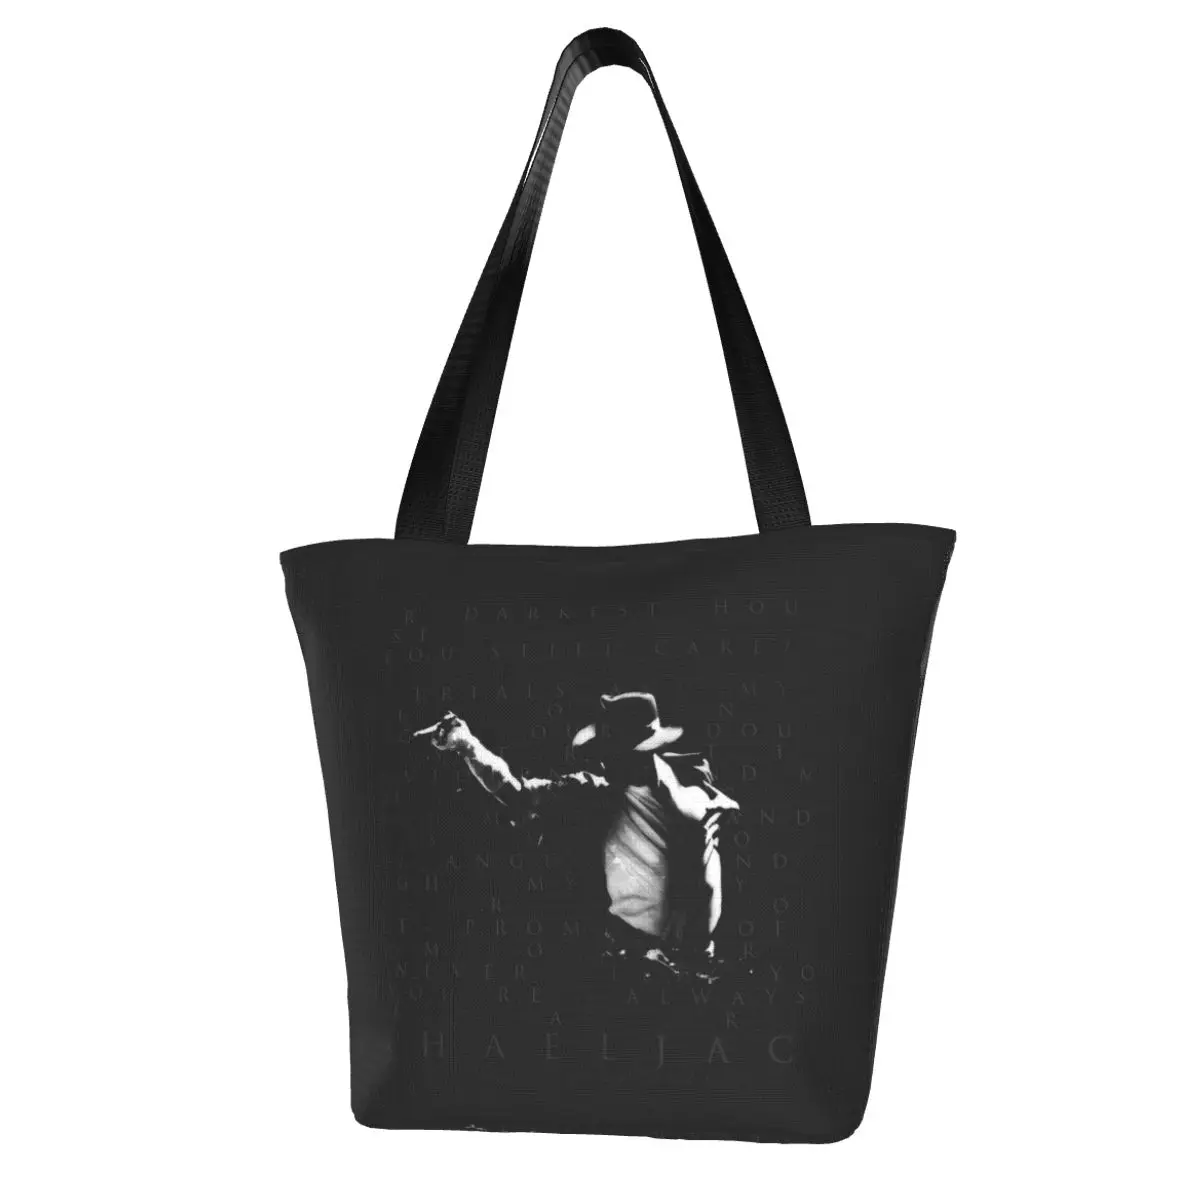 Michael Jacksons Shopping Bag Aesthetic Cloth Outdoor Handbag Female Fashion Bags